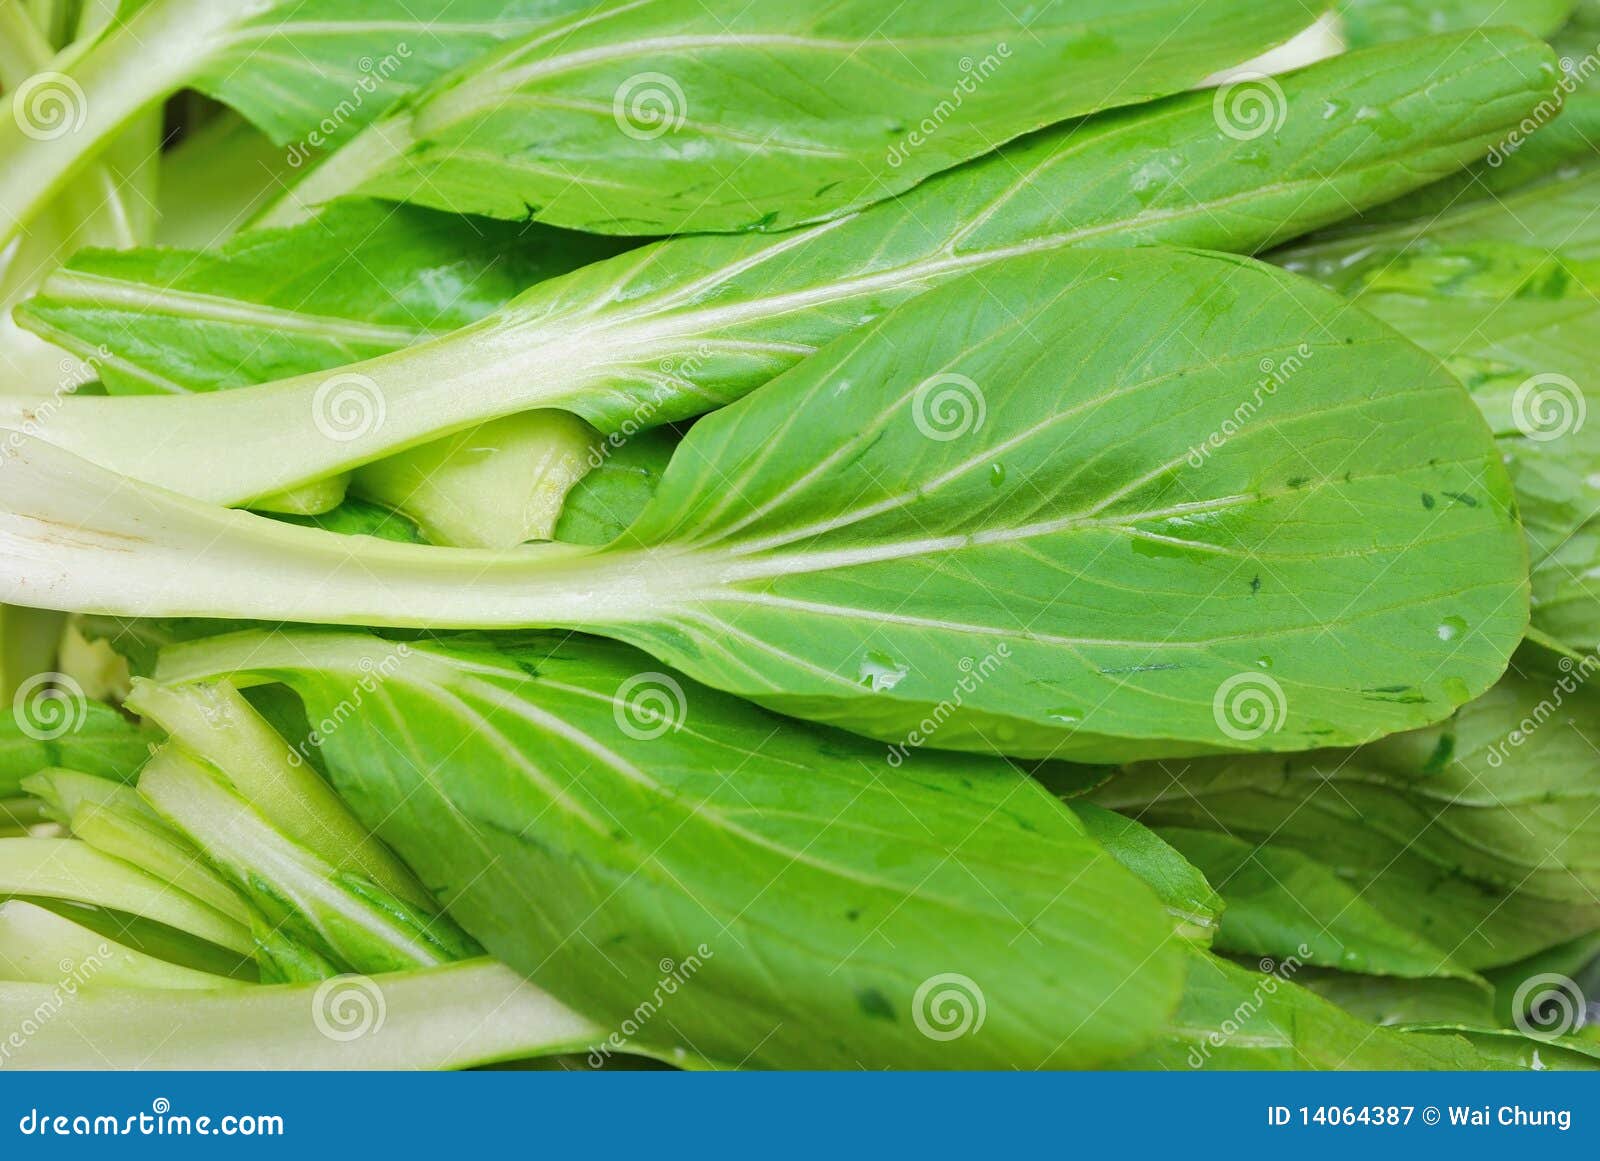 green leafy vegetables, brassica rapa